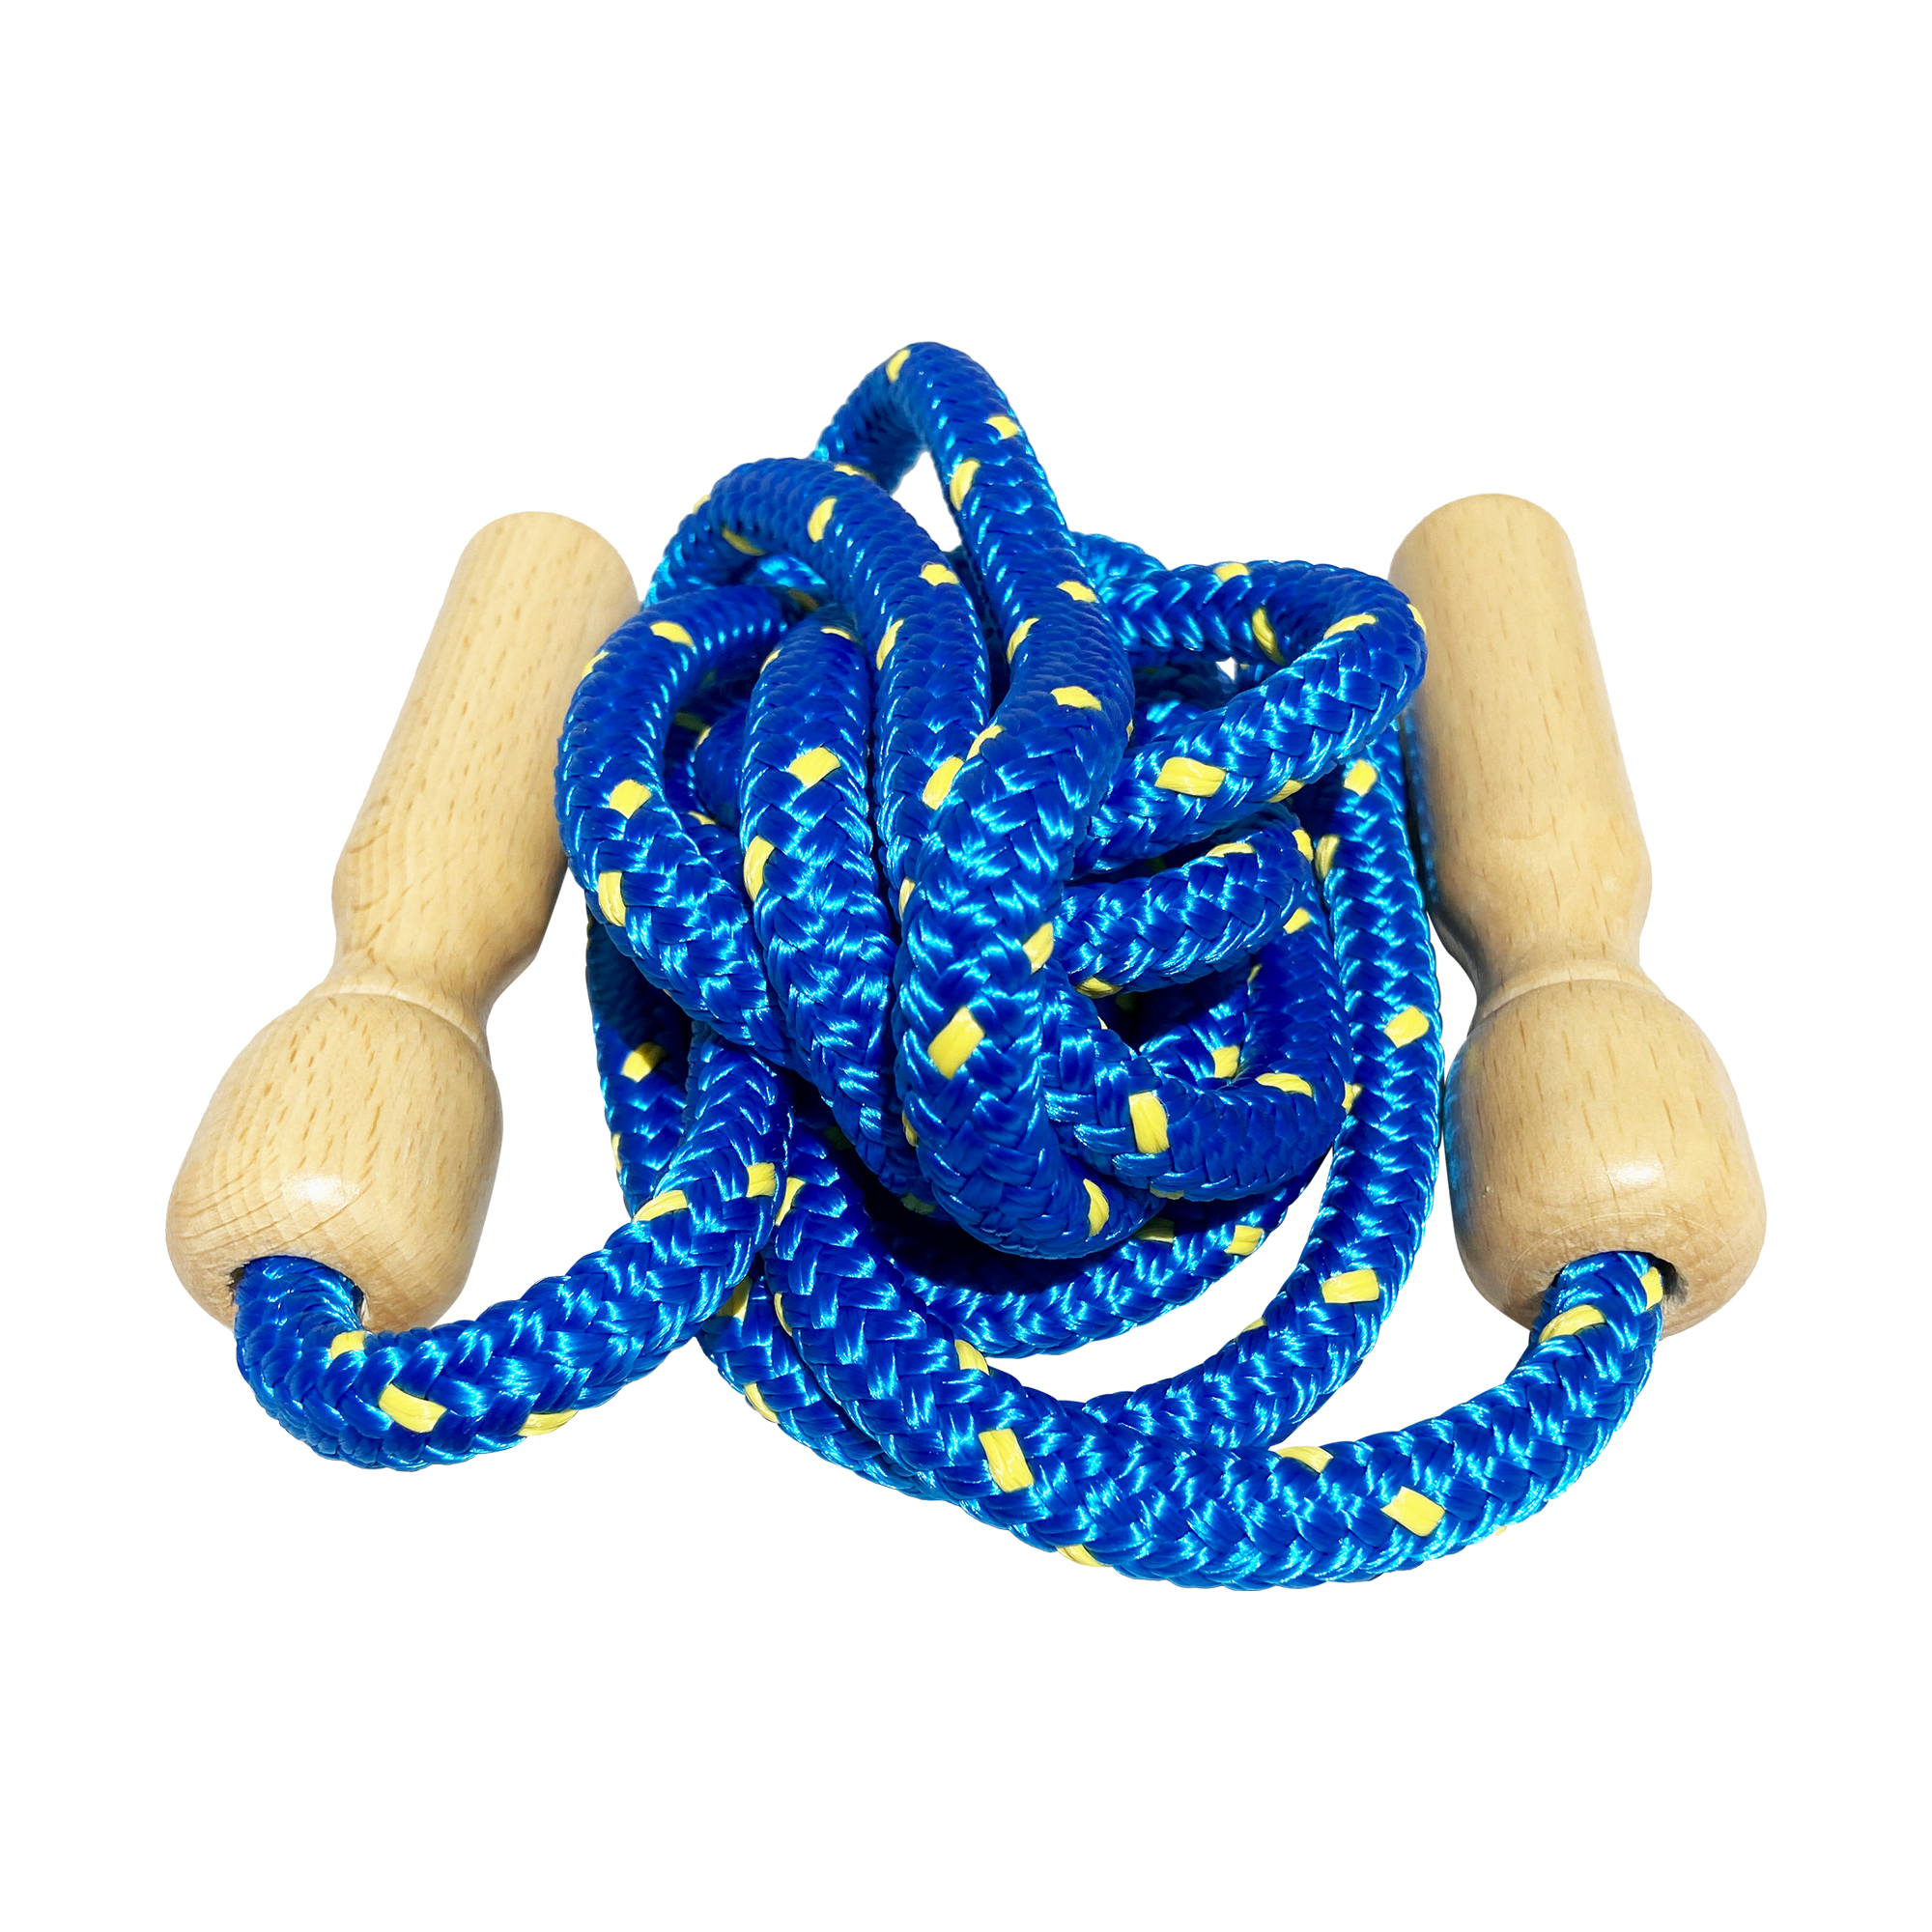 GICO Springseil aus Holz, buntes Seil, 250 cm, Holzgriff Springseil Hüpfseil Seilspringen - Qualität Made in Germany - 3003 blau